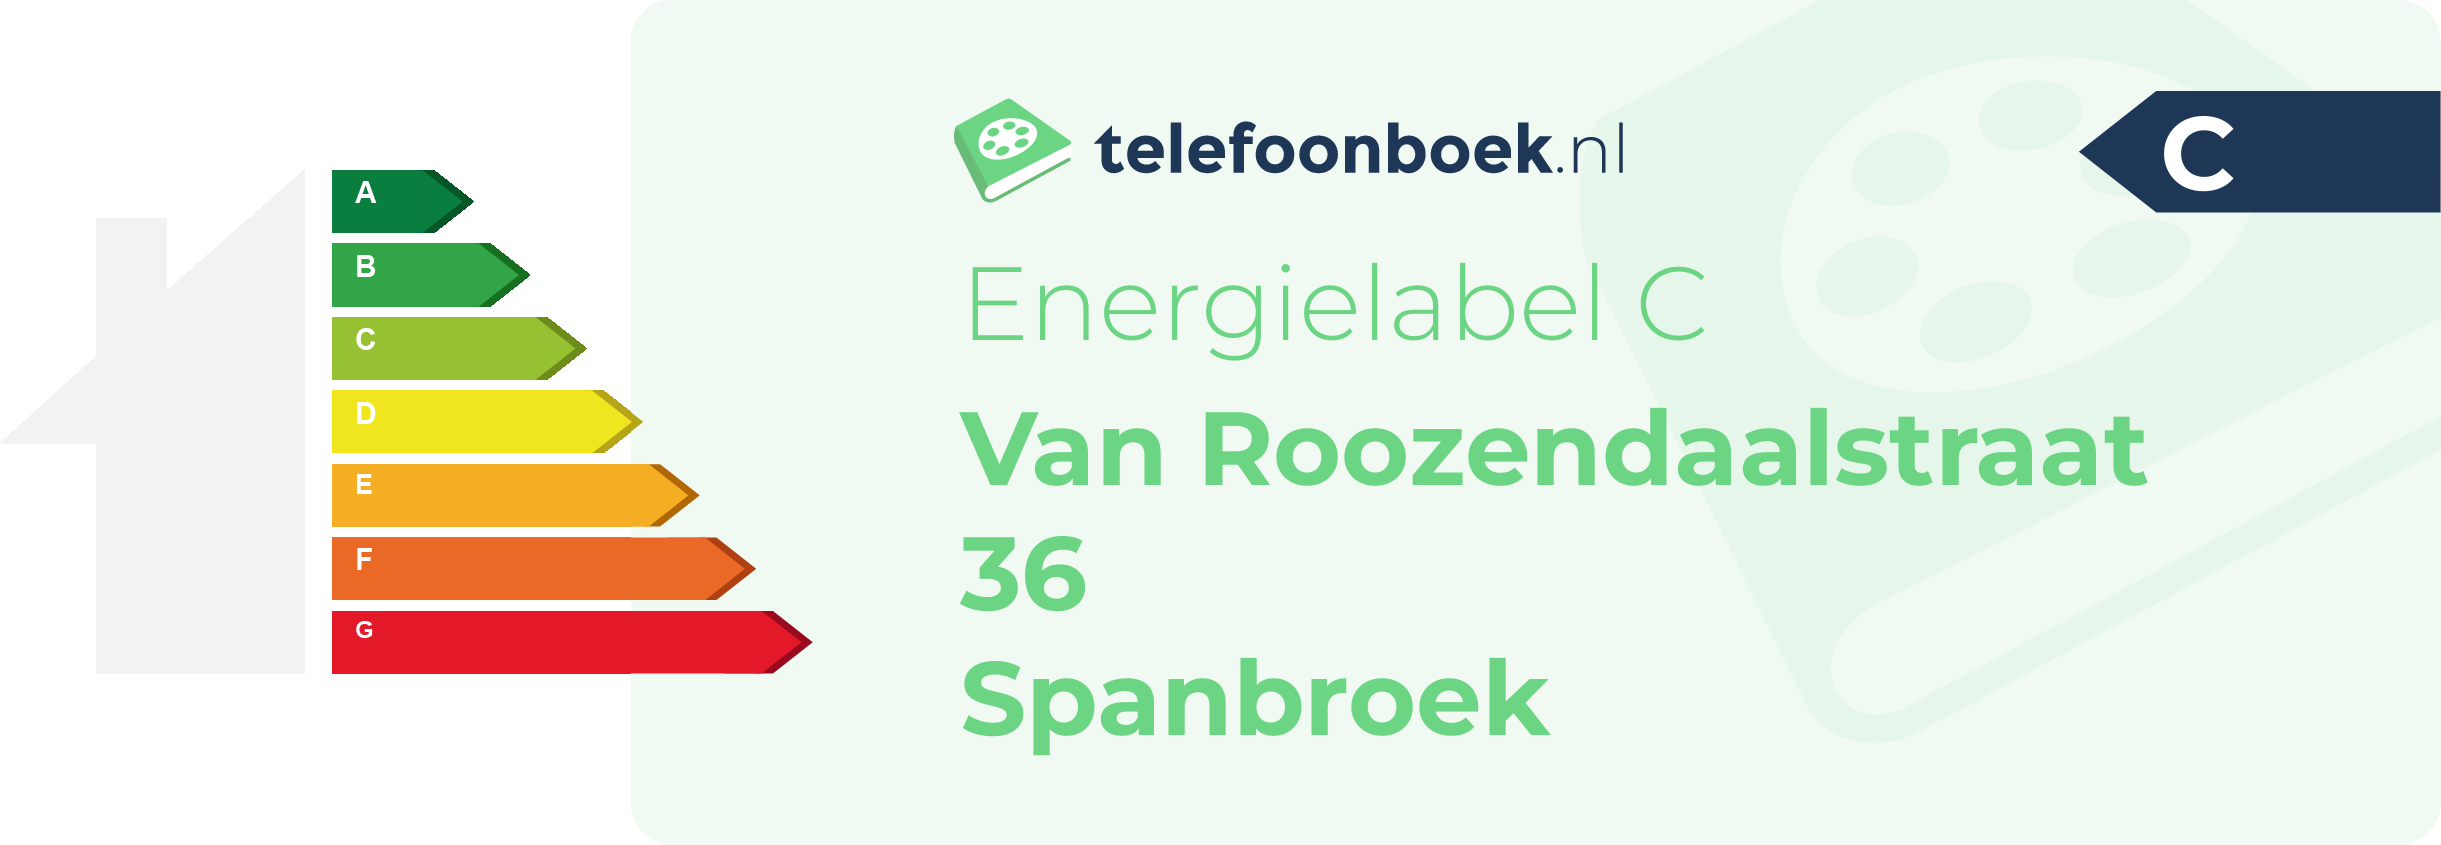 Energielabel Van Roozendaalstraat 36 Spanbroek